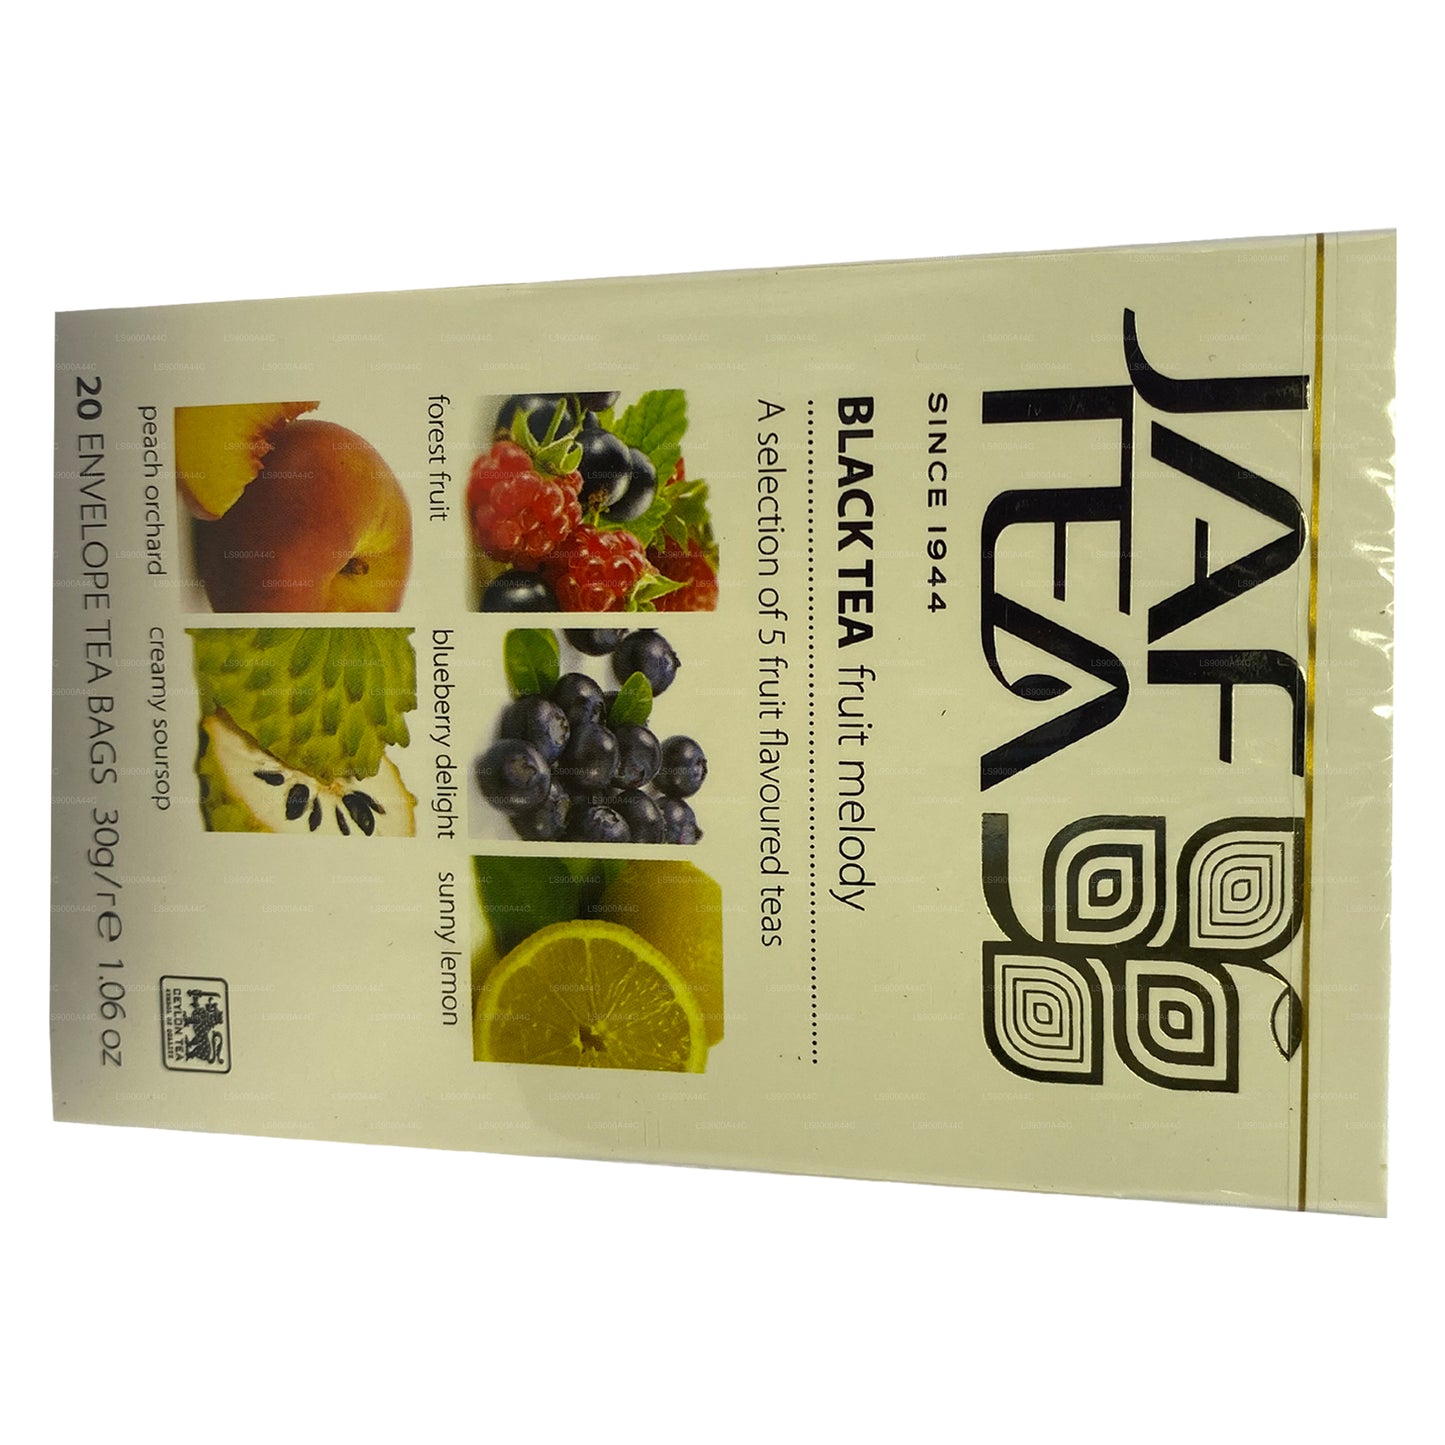 Jaf Tea Pure Fruits Collection Black Tea Fruit Melody (30 g) 20 Teebeutel